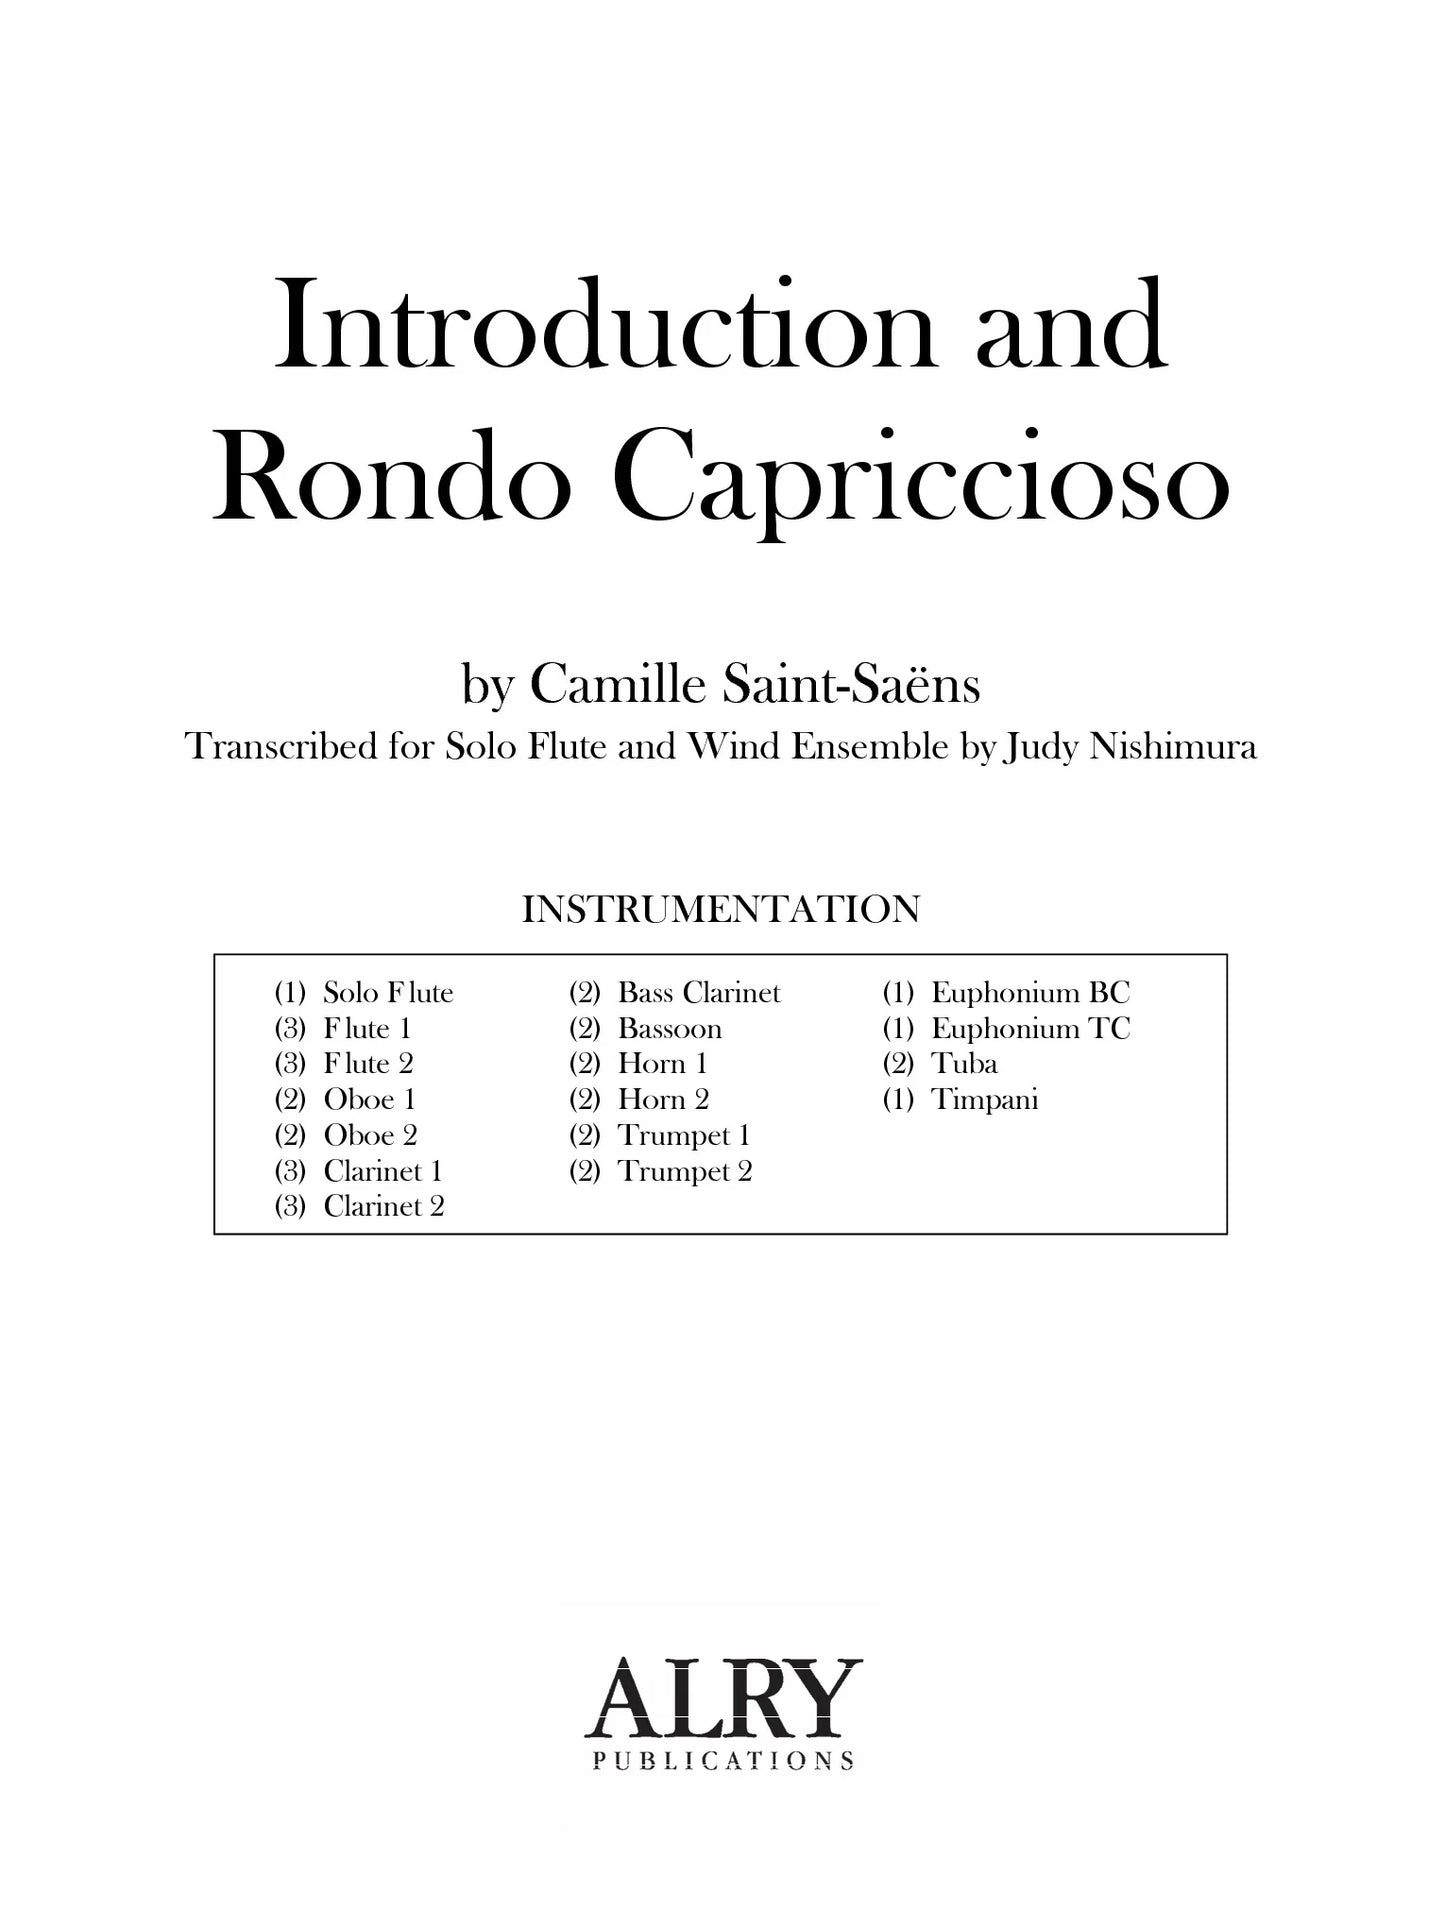 Saint-Saens (trans. Nishimura) - Introduction and Rondo Capriccioso (S